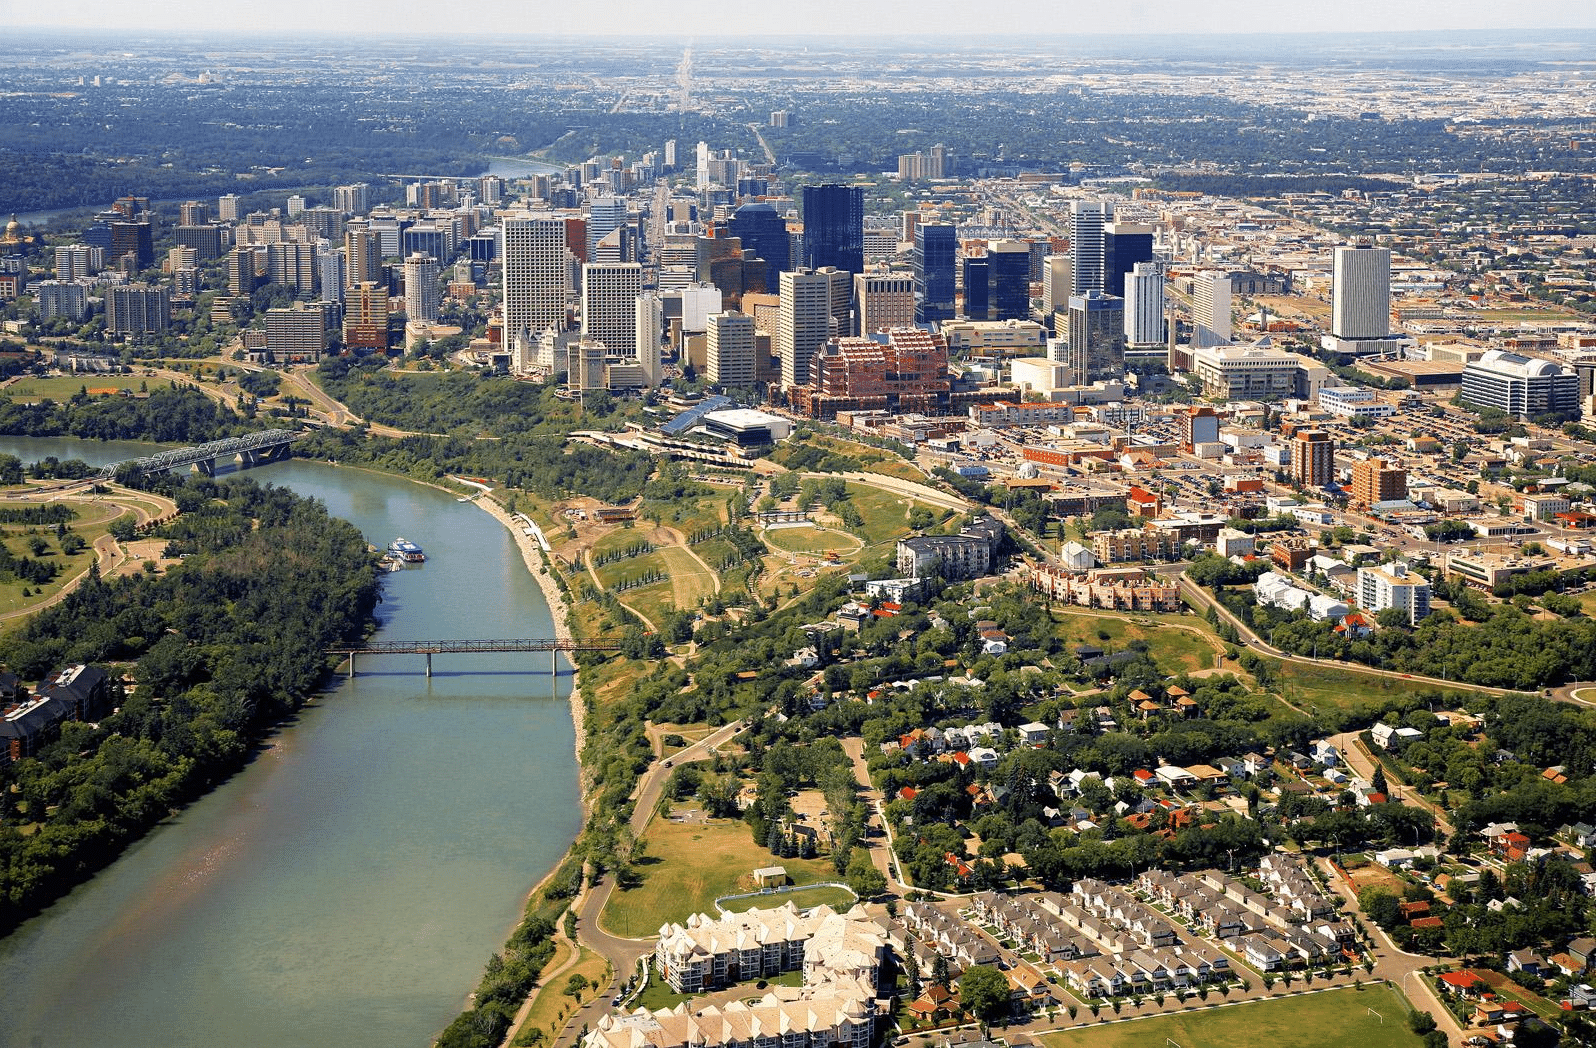 The Edmonton region